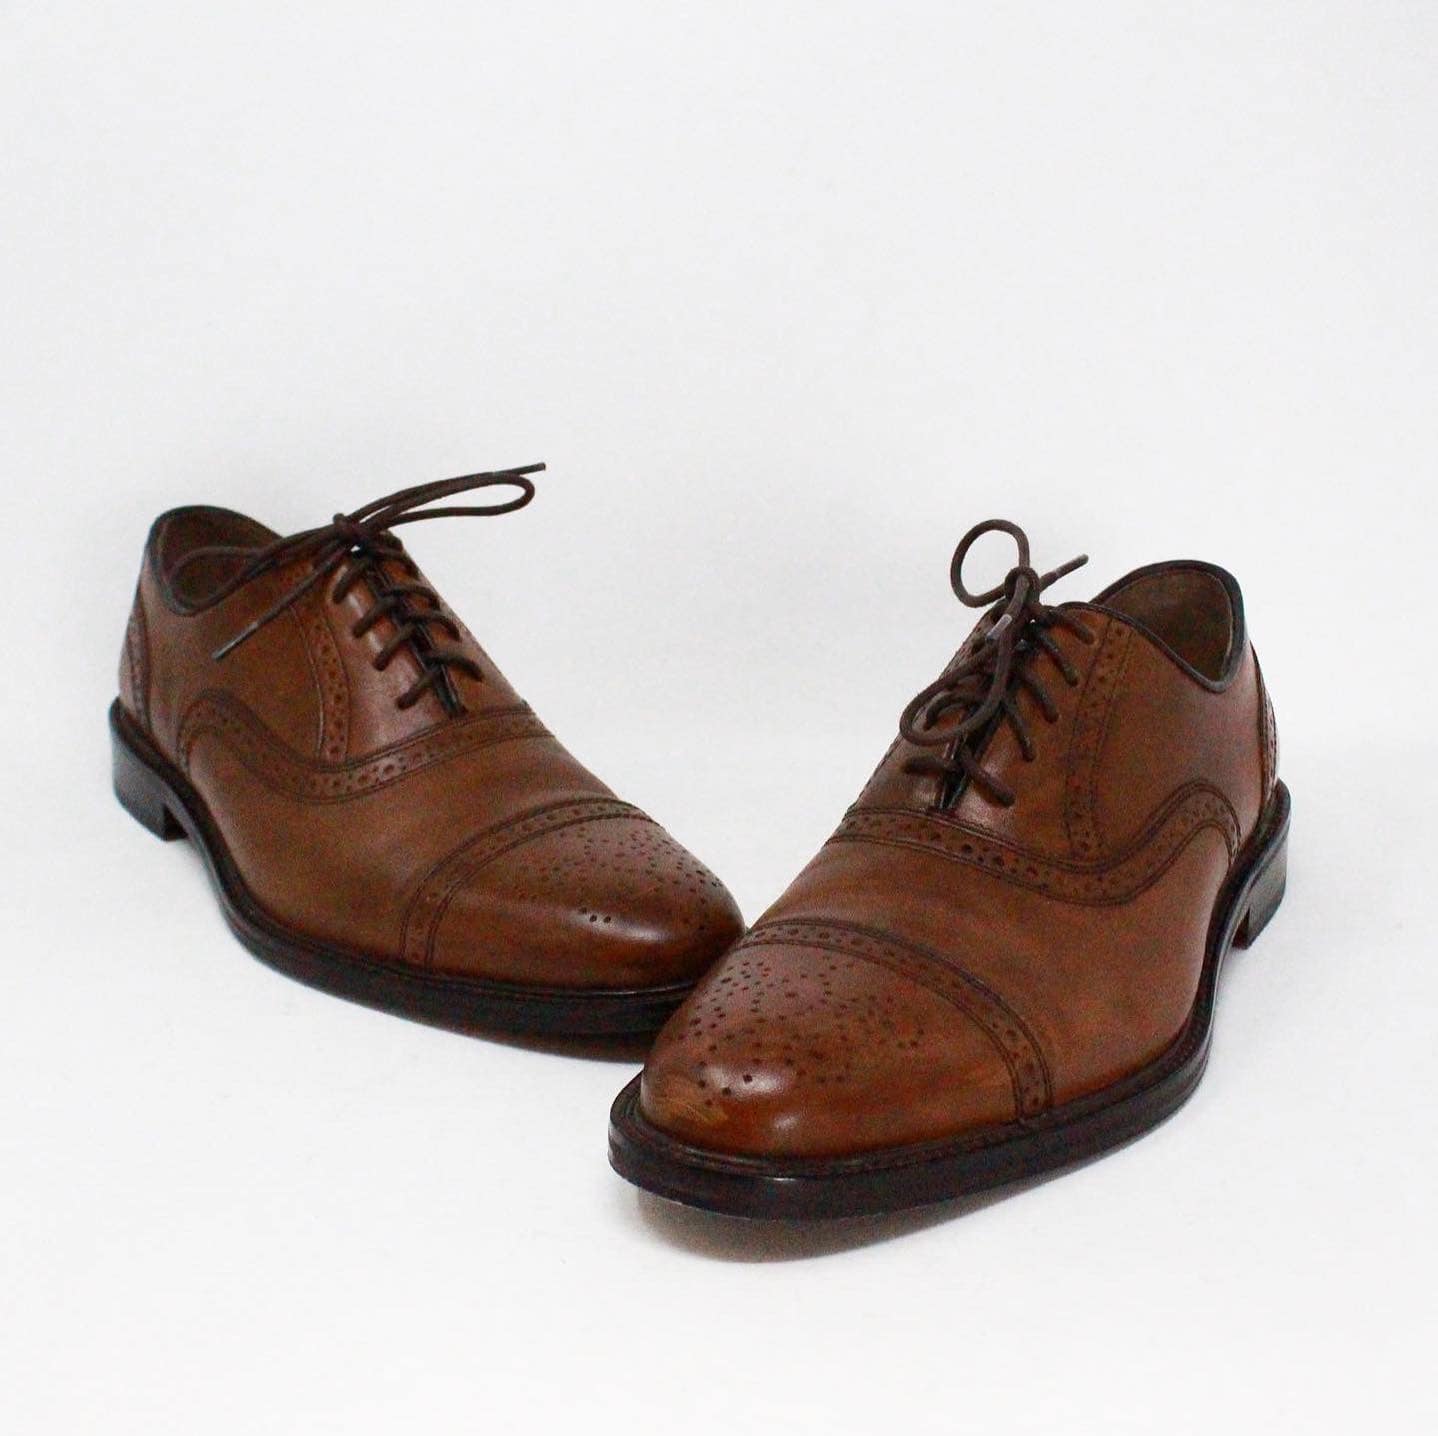 JOHNSON MURPHY 40283 Brown Leather Conard Cap Toe Oxford Mens Shoes US 9.5 EU 39.5 1